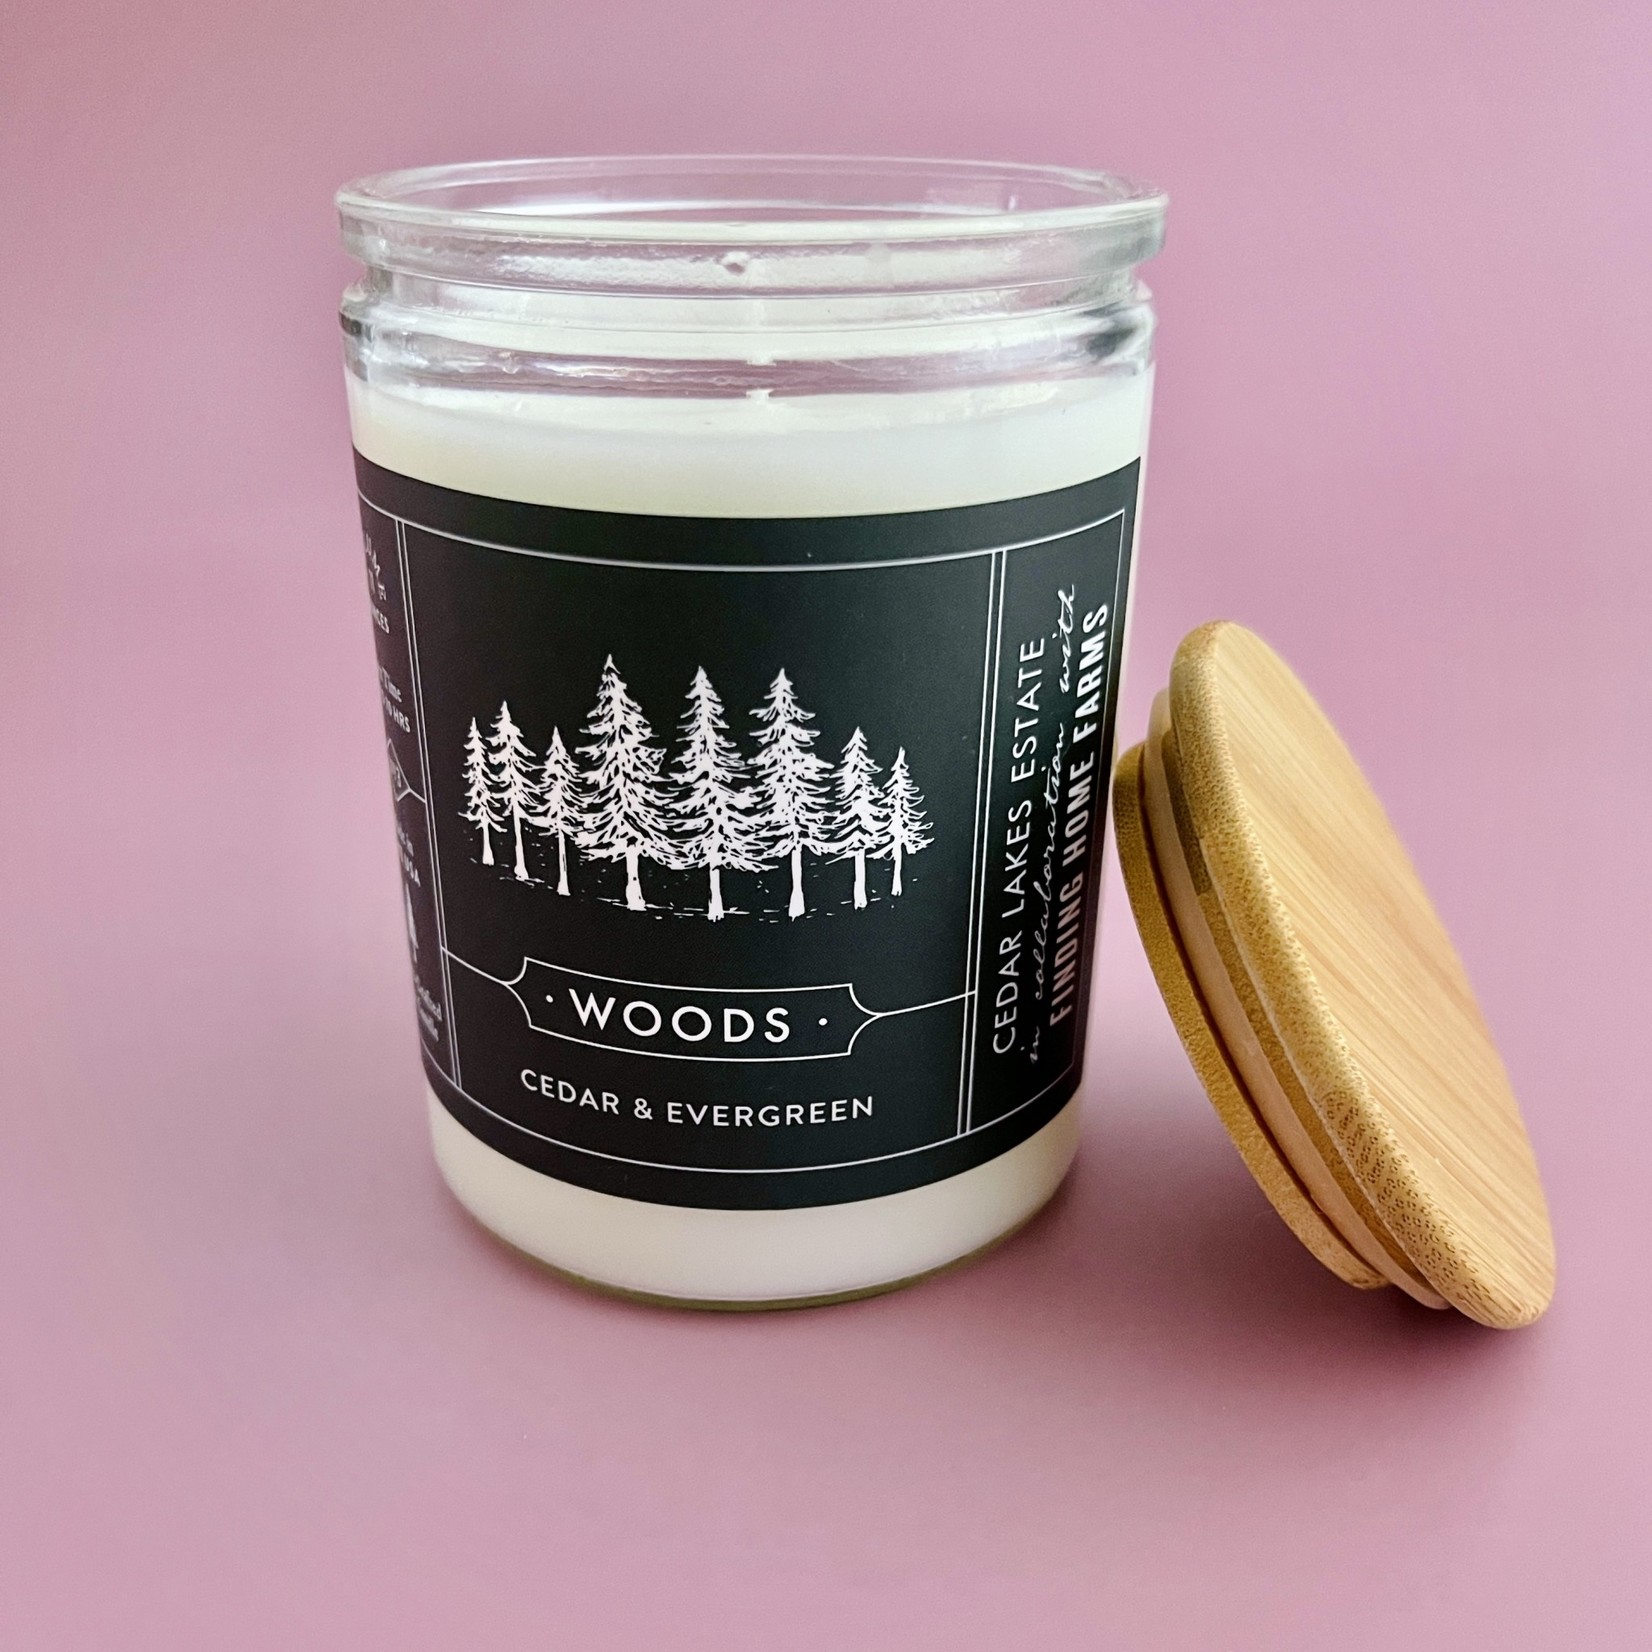 Woods: Cedar & Evergreen Candle